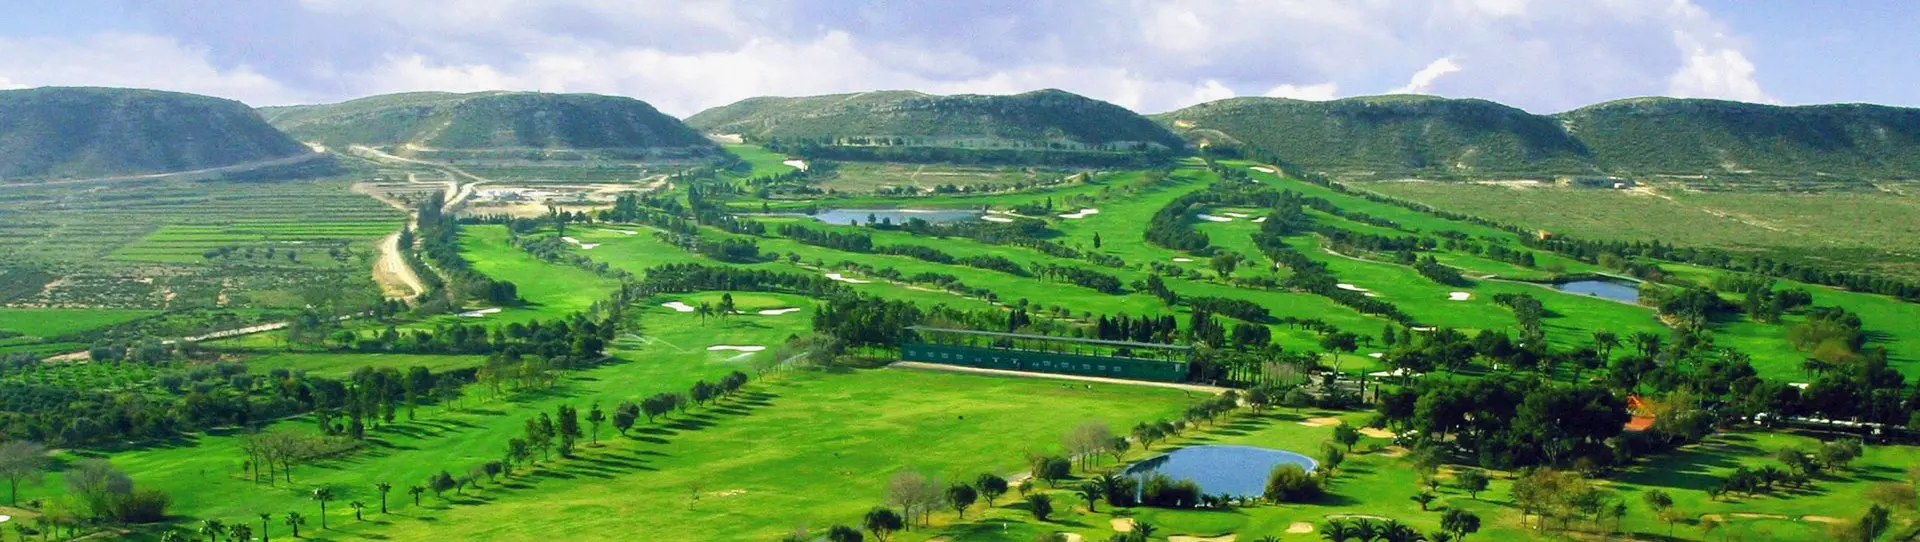 Spain golf courses - El Plantio Golf Course - Photo 2